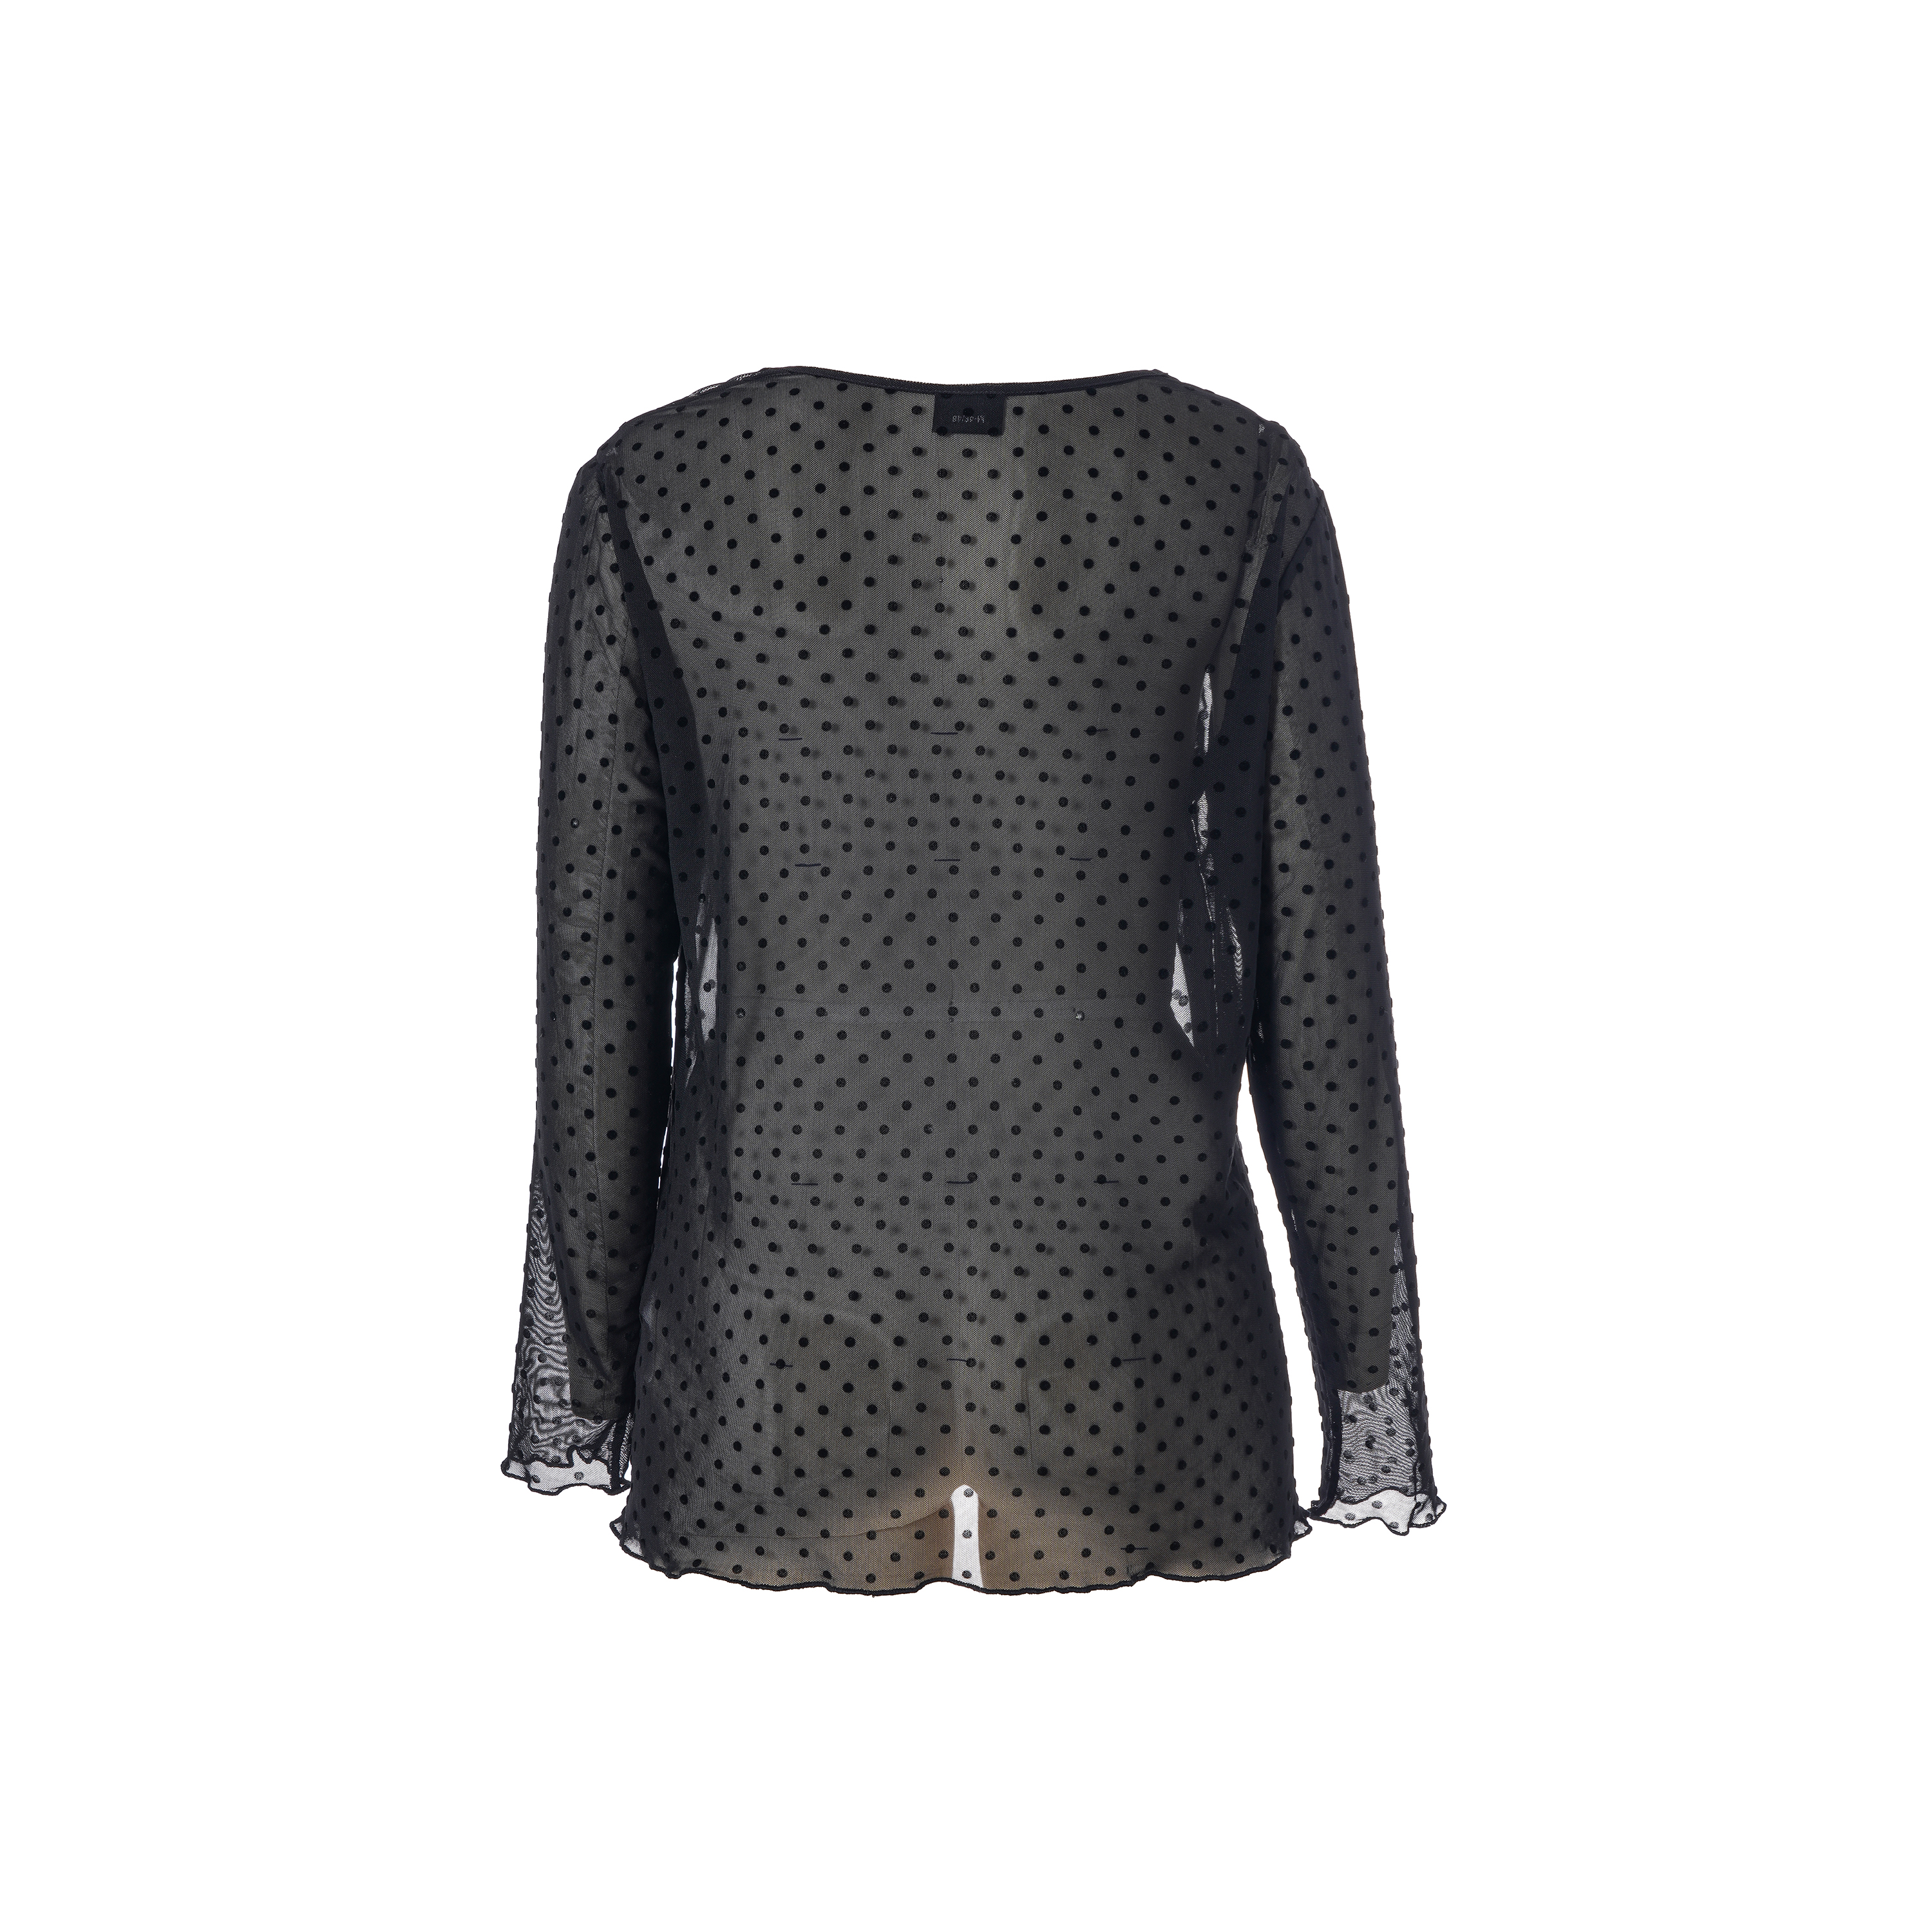 Gozzip Shirt Mesh transparent - Curvy by BiNA große Größen Mode